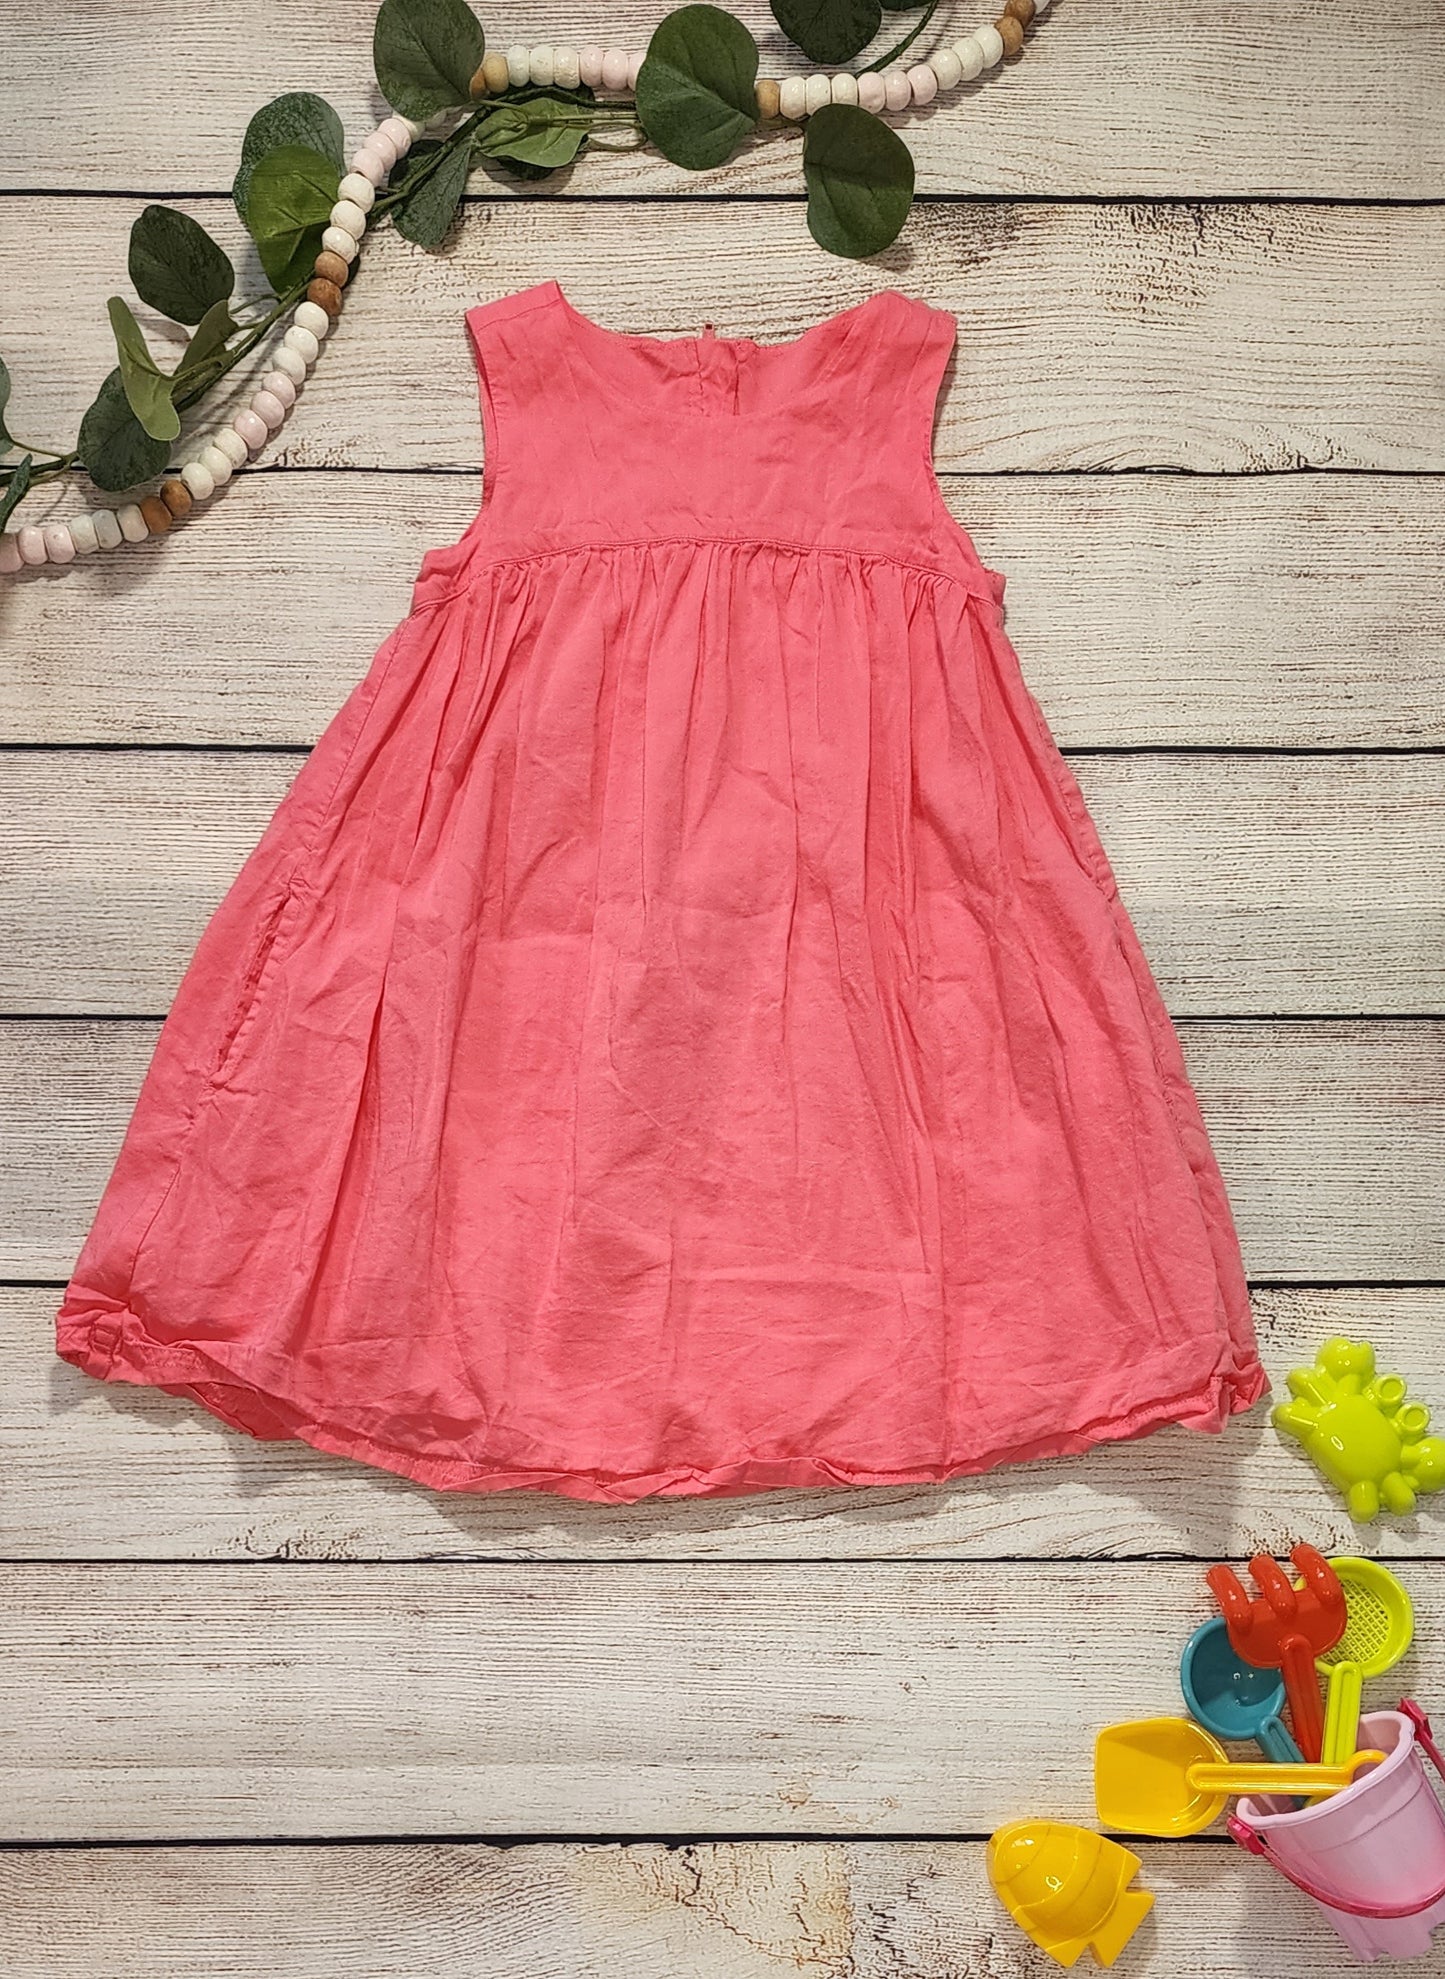 Primary Dress, Size 4-5